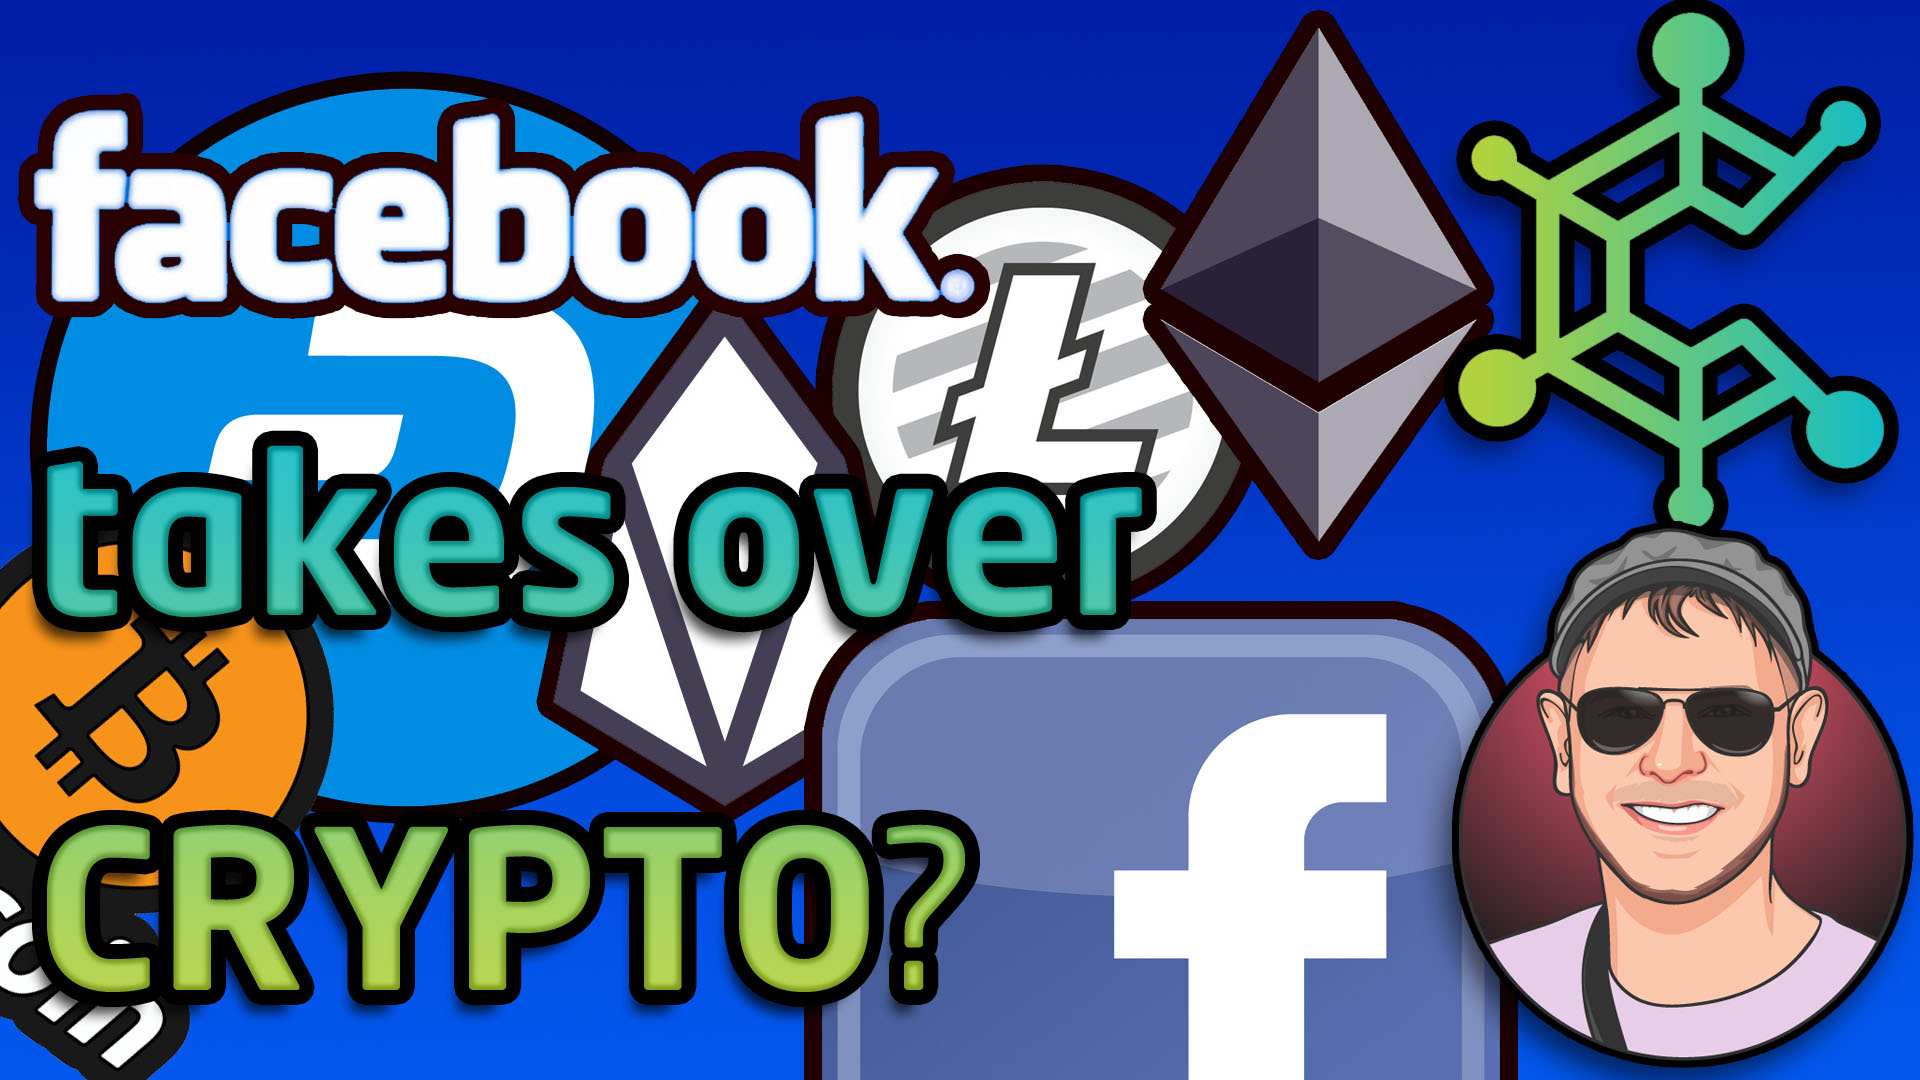 text: "facebook takes over crypto?" dash, btc, ltc, eos, eth, fb logos on blue background, cryptonomics logo, cartoon of kurt in corner